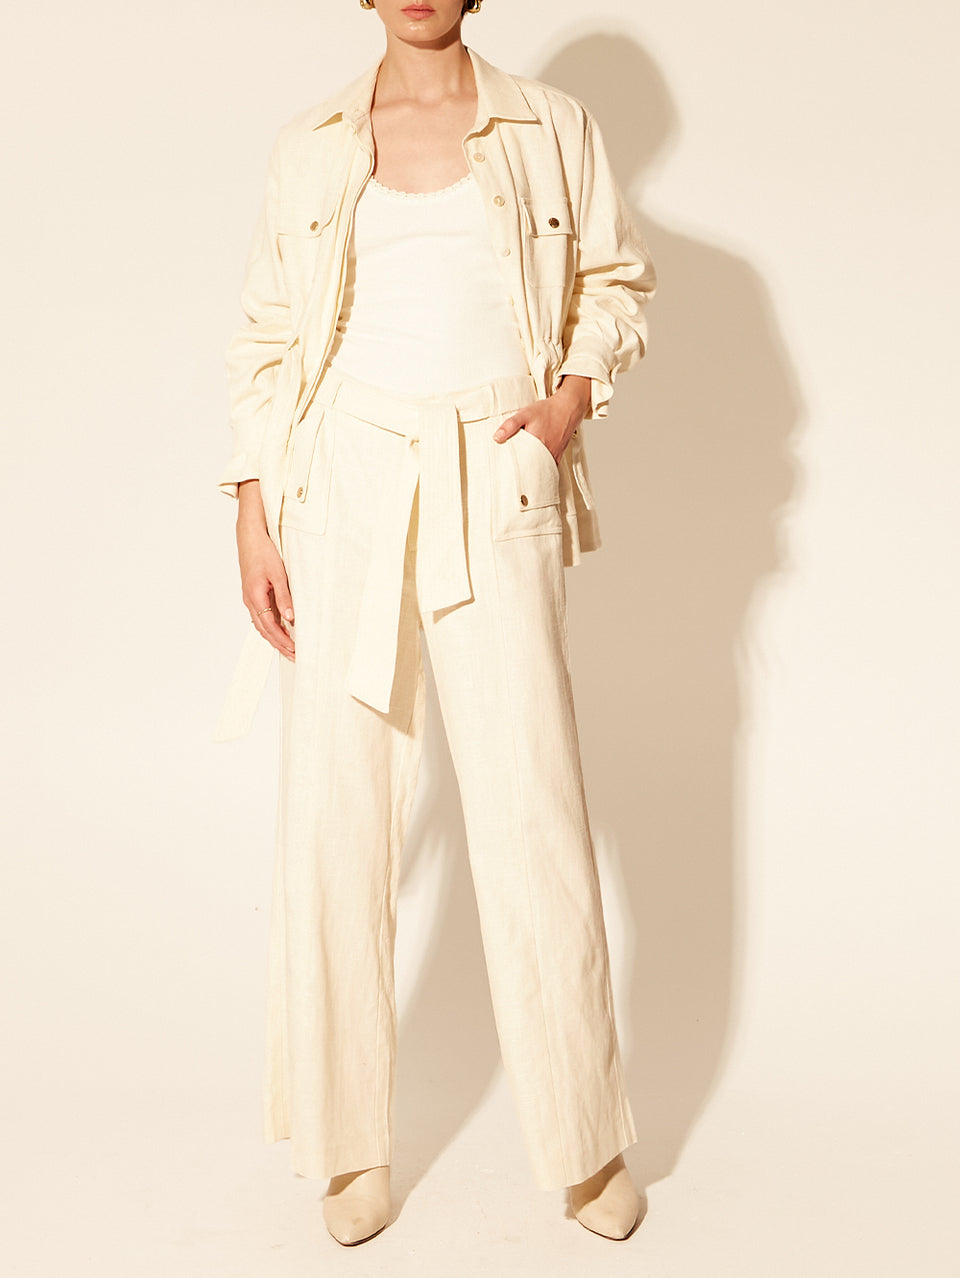 Oaklee Pant Cream KIVARI | Model wears cream pant 